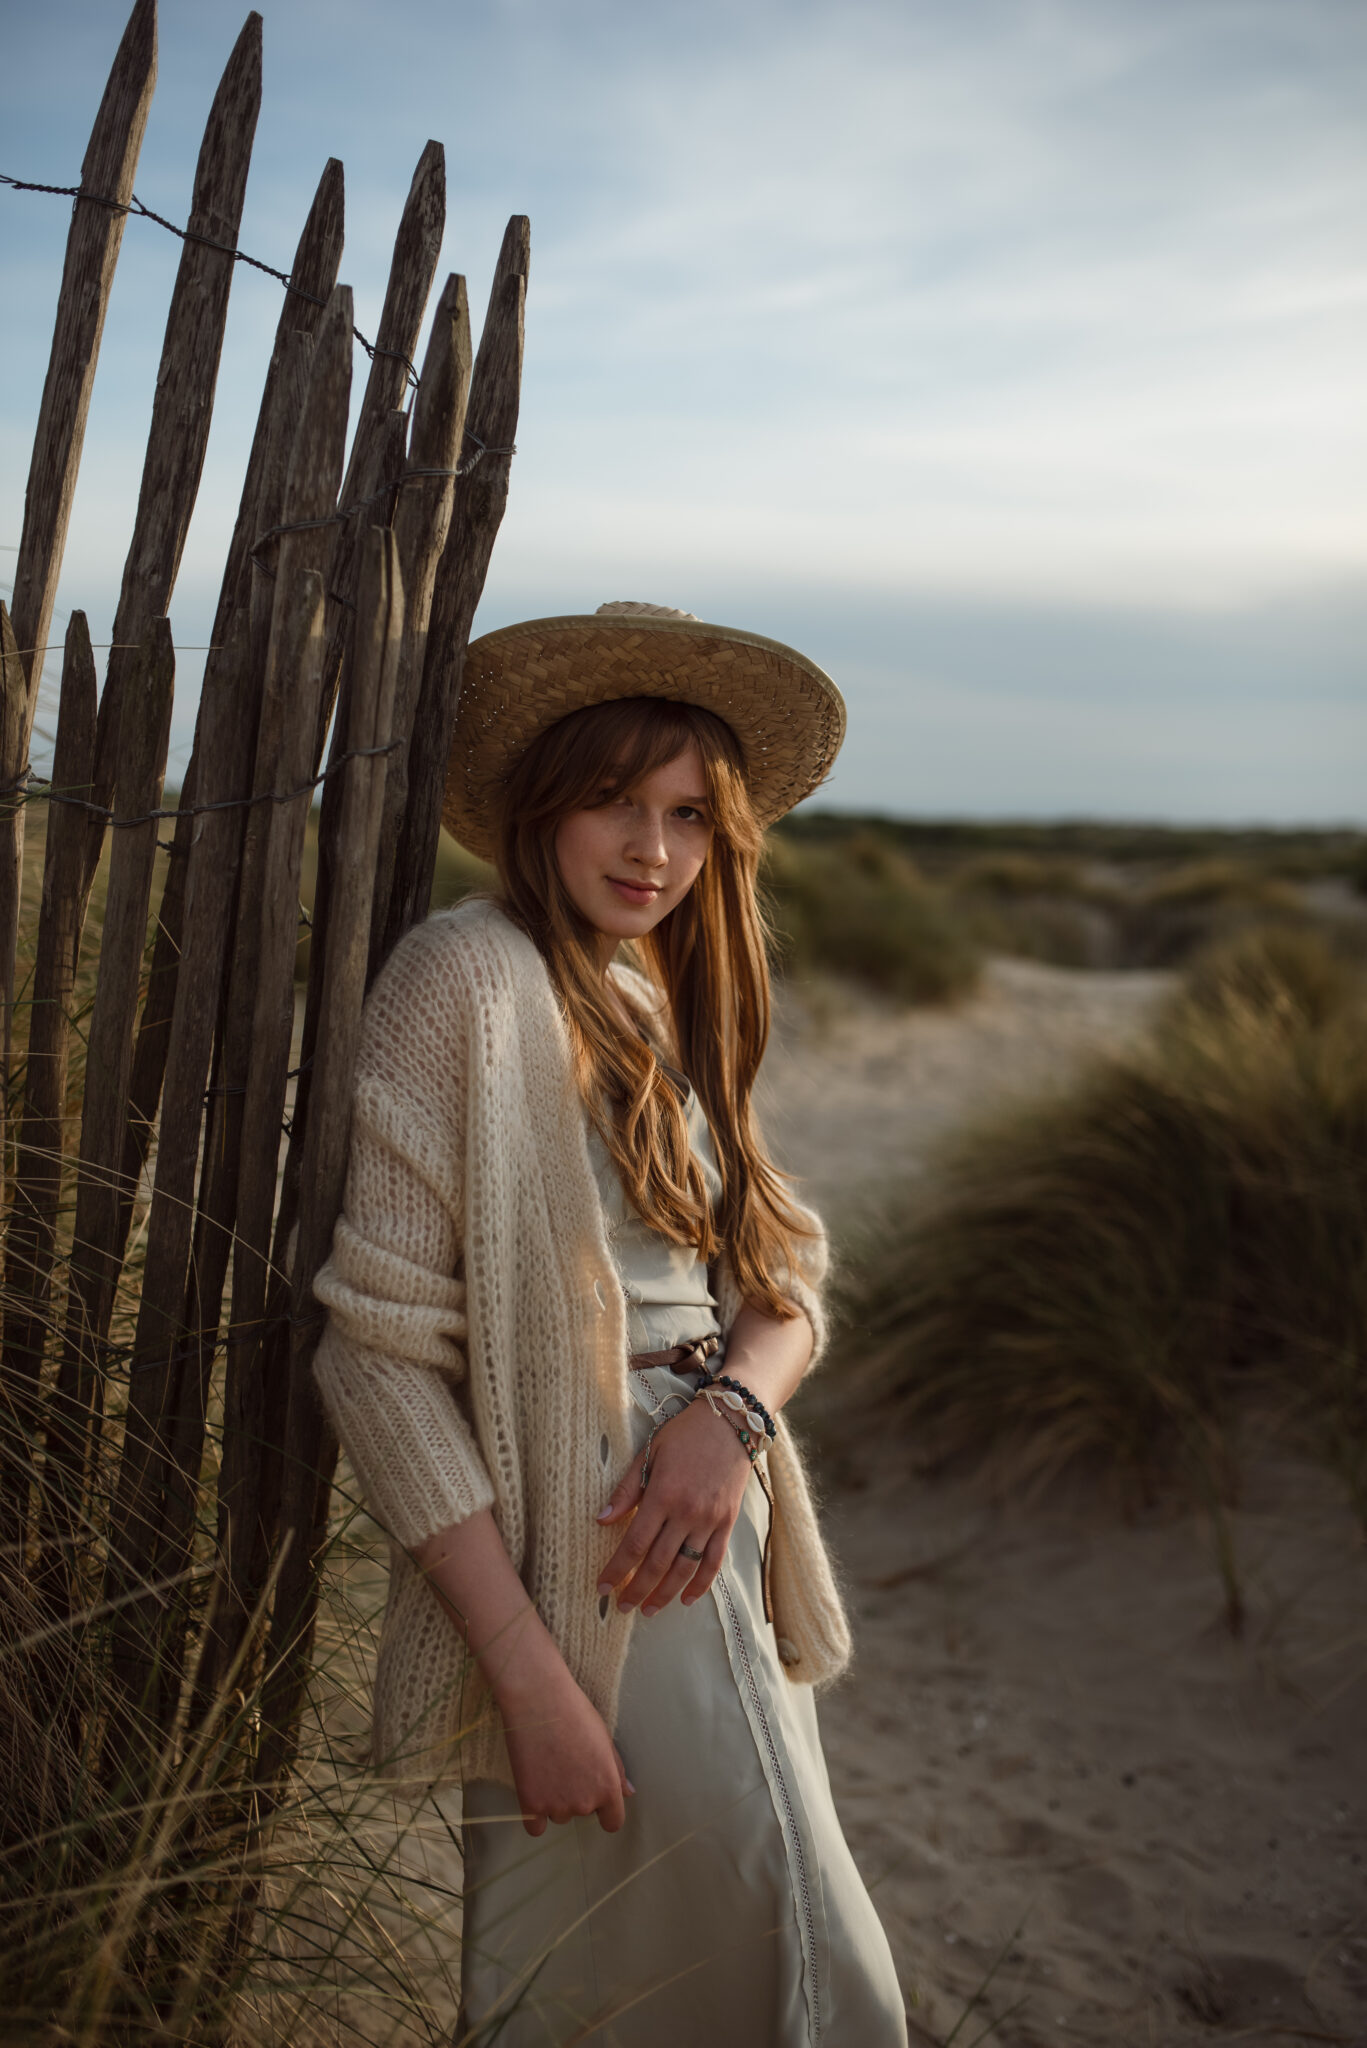 Boho style, teenage girl with a hat on a beach